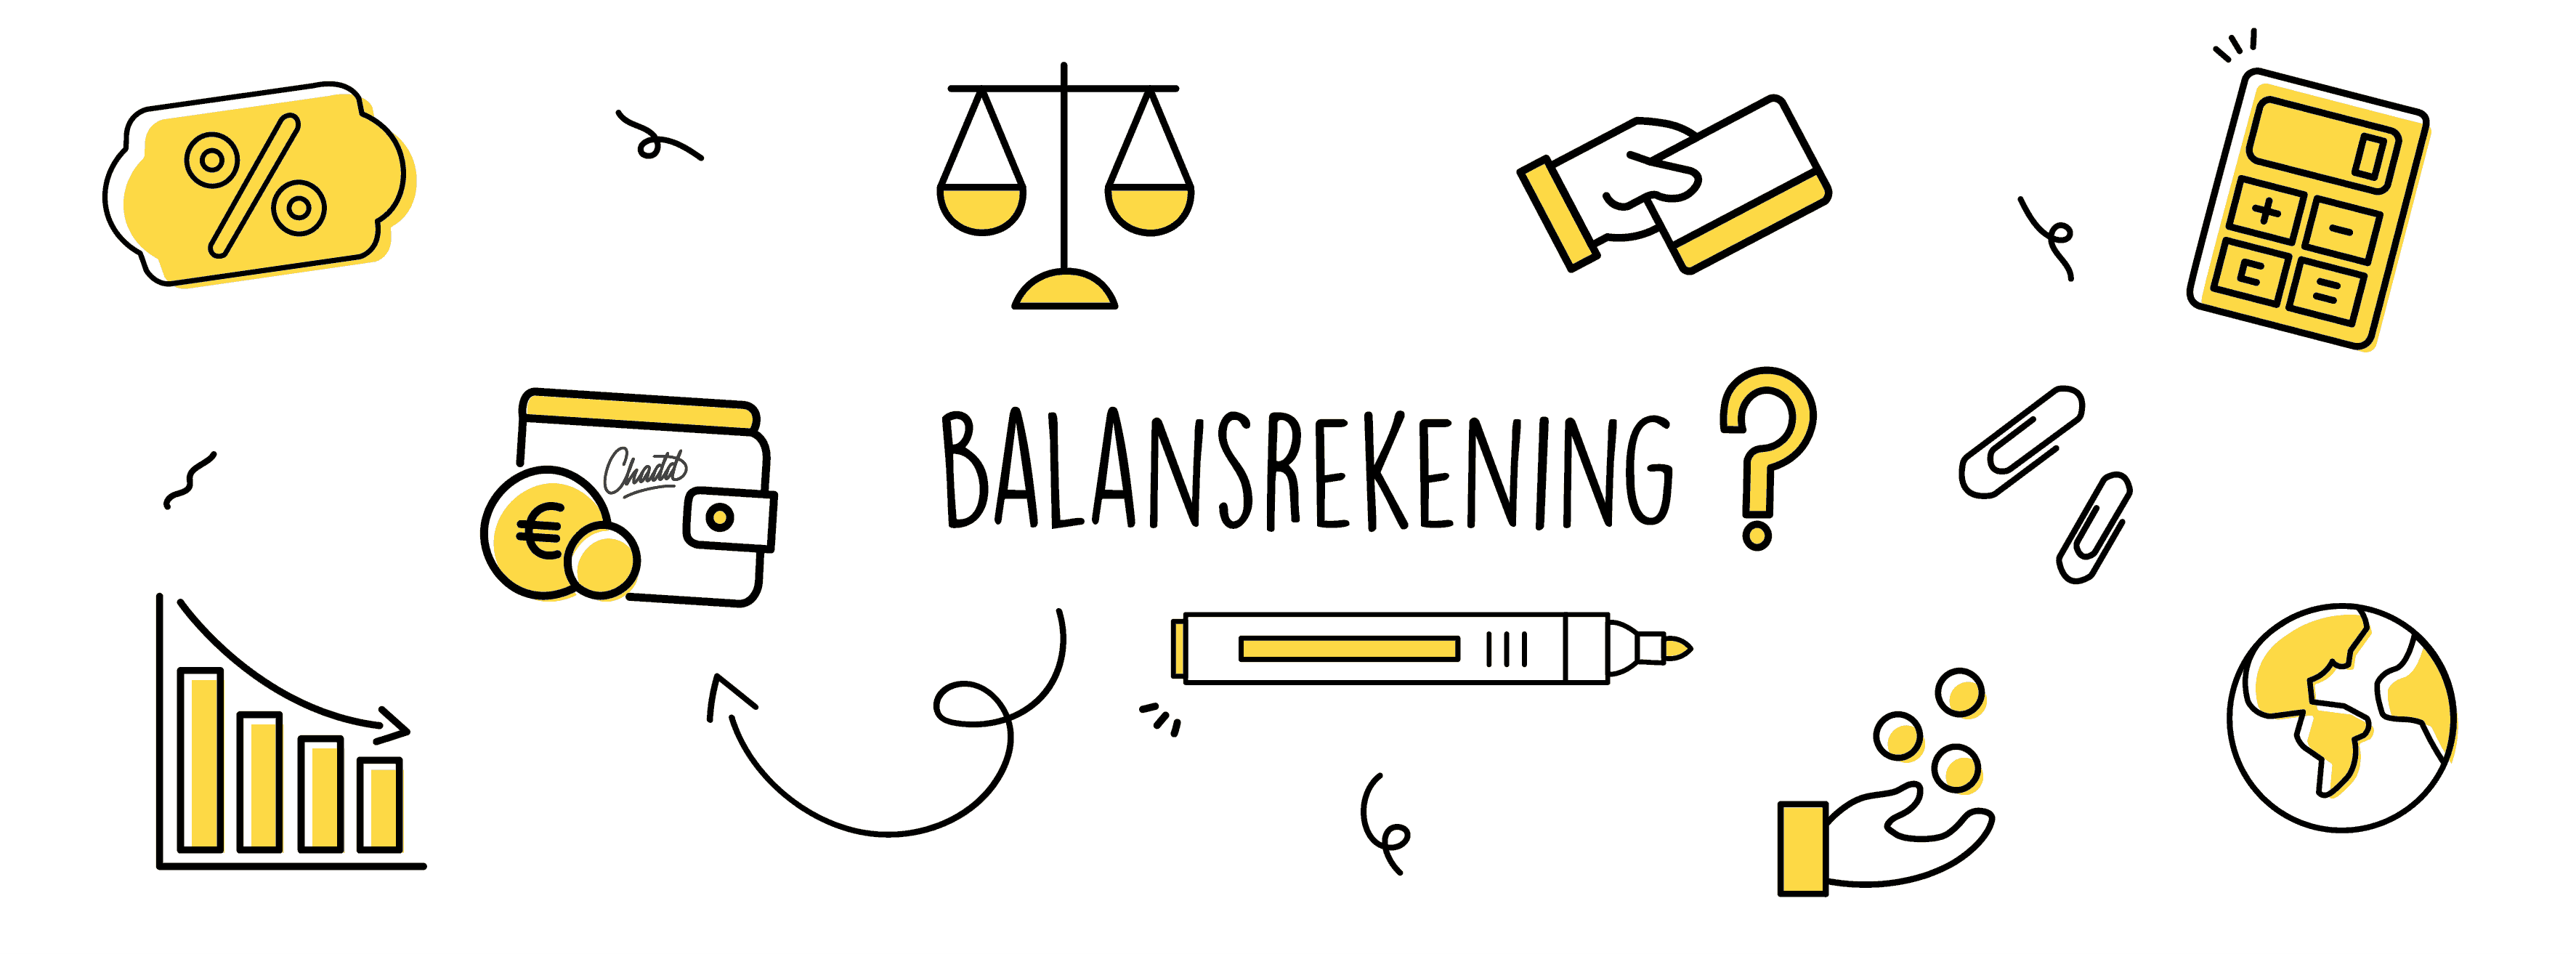 Balansrekening